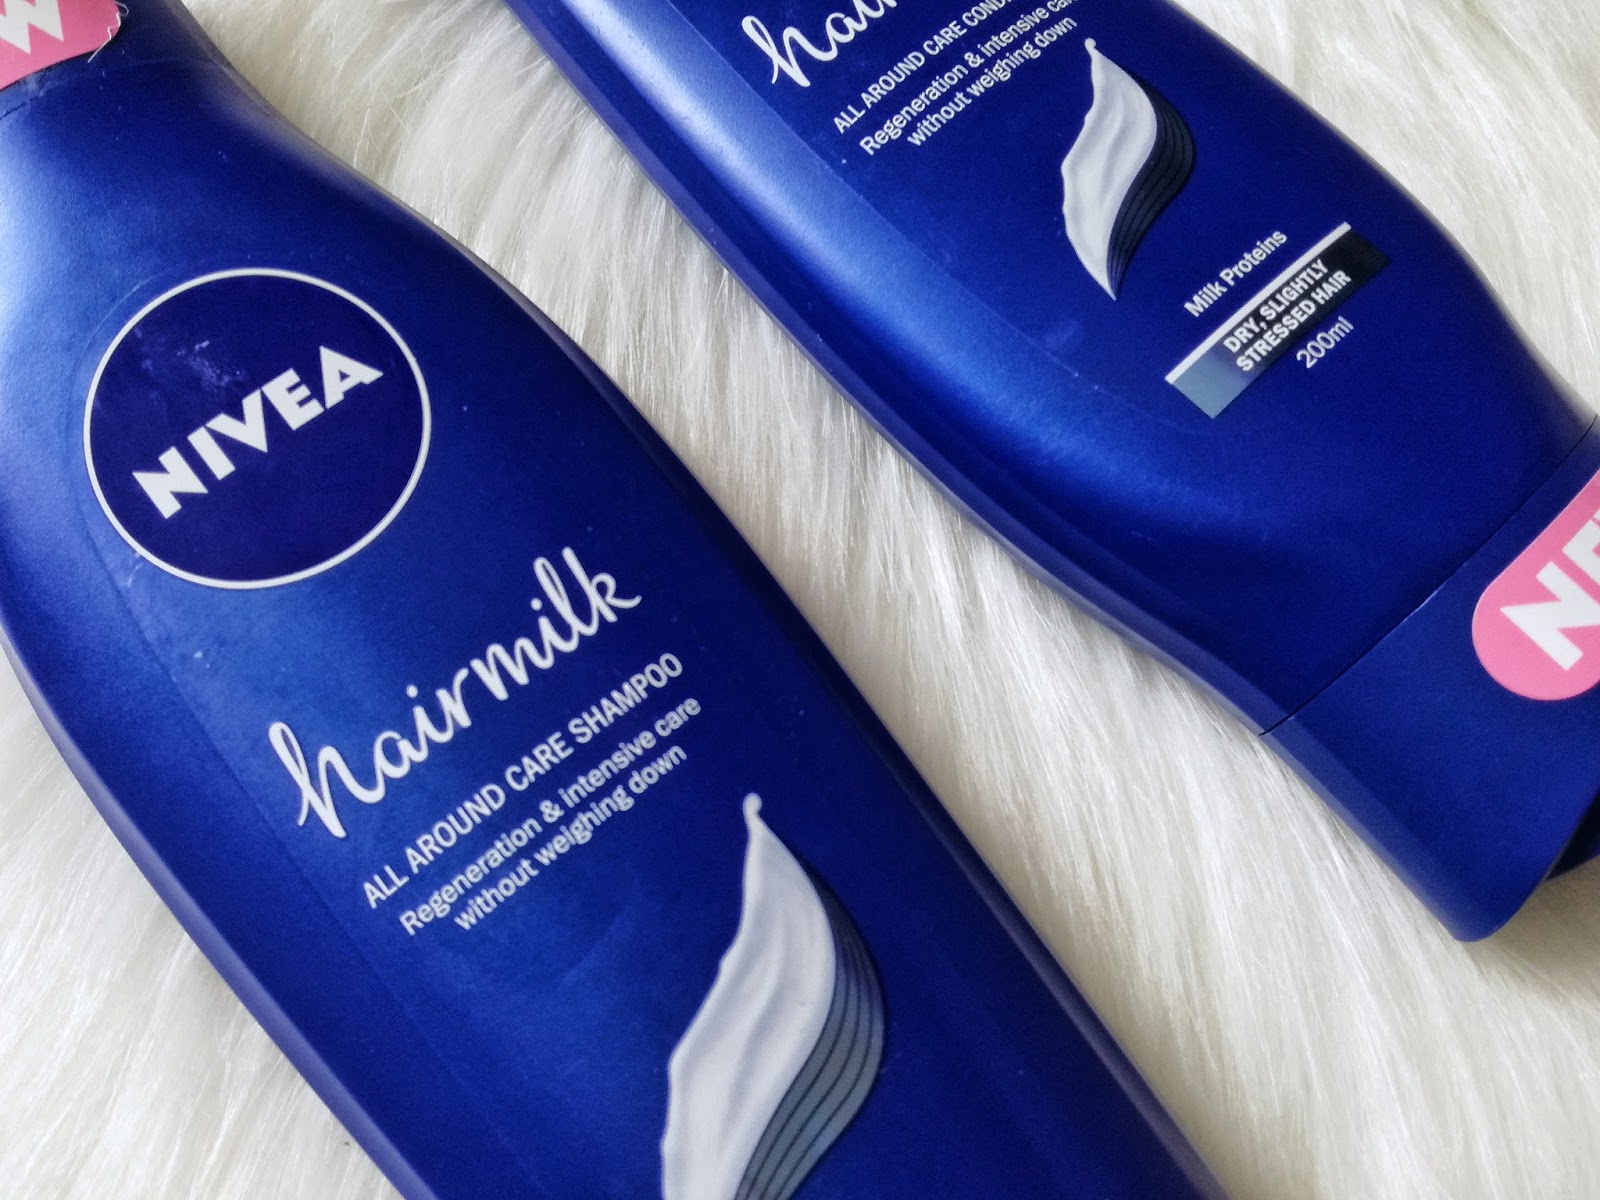 nivea-hairmilk-shampoo-conditioner-review